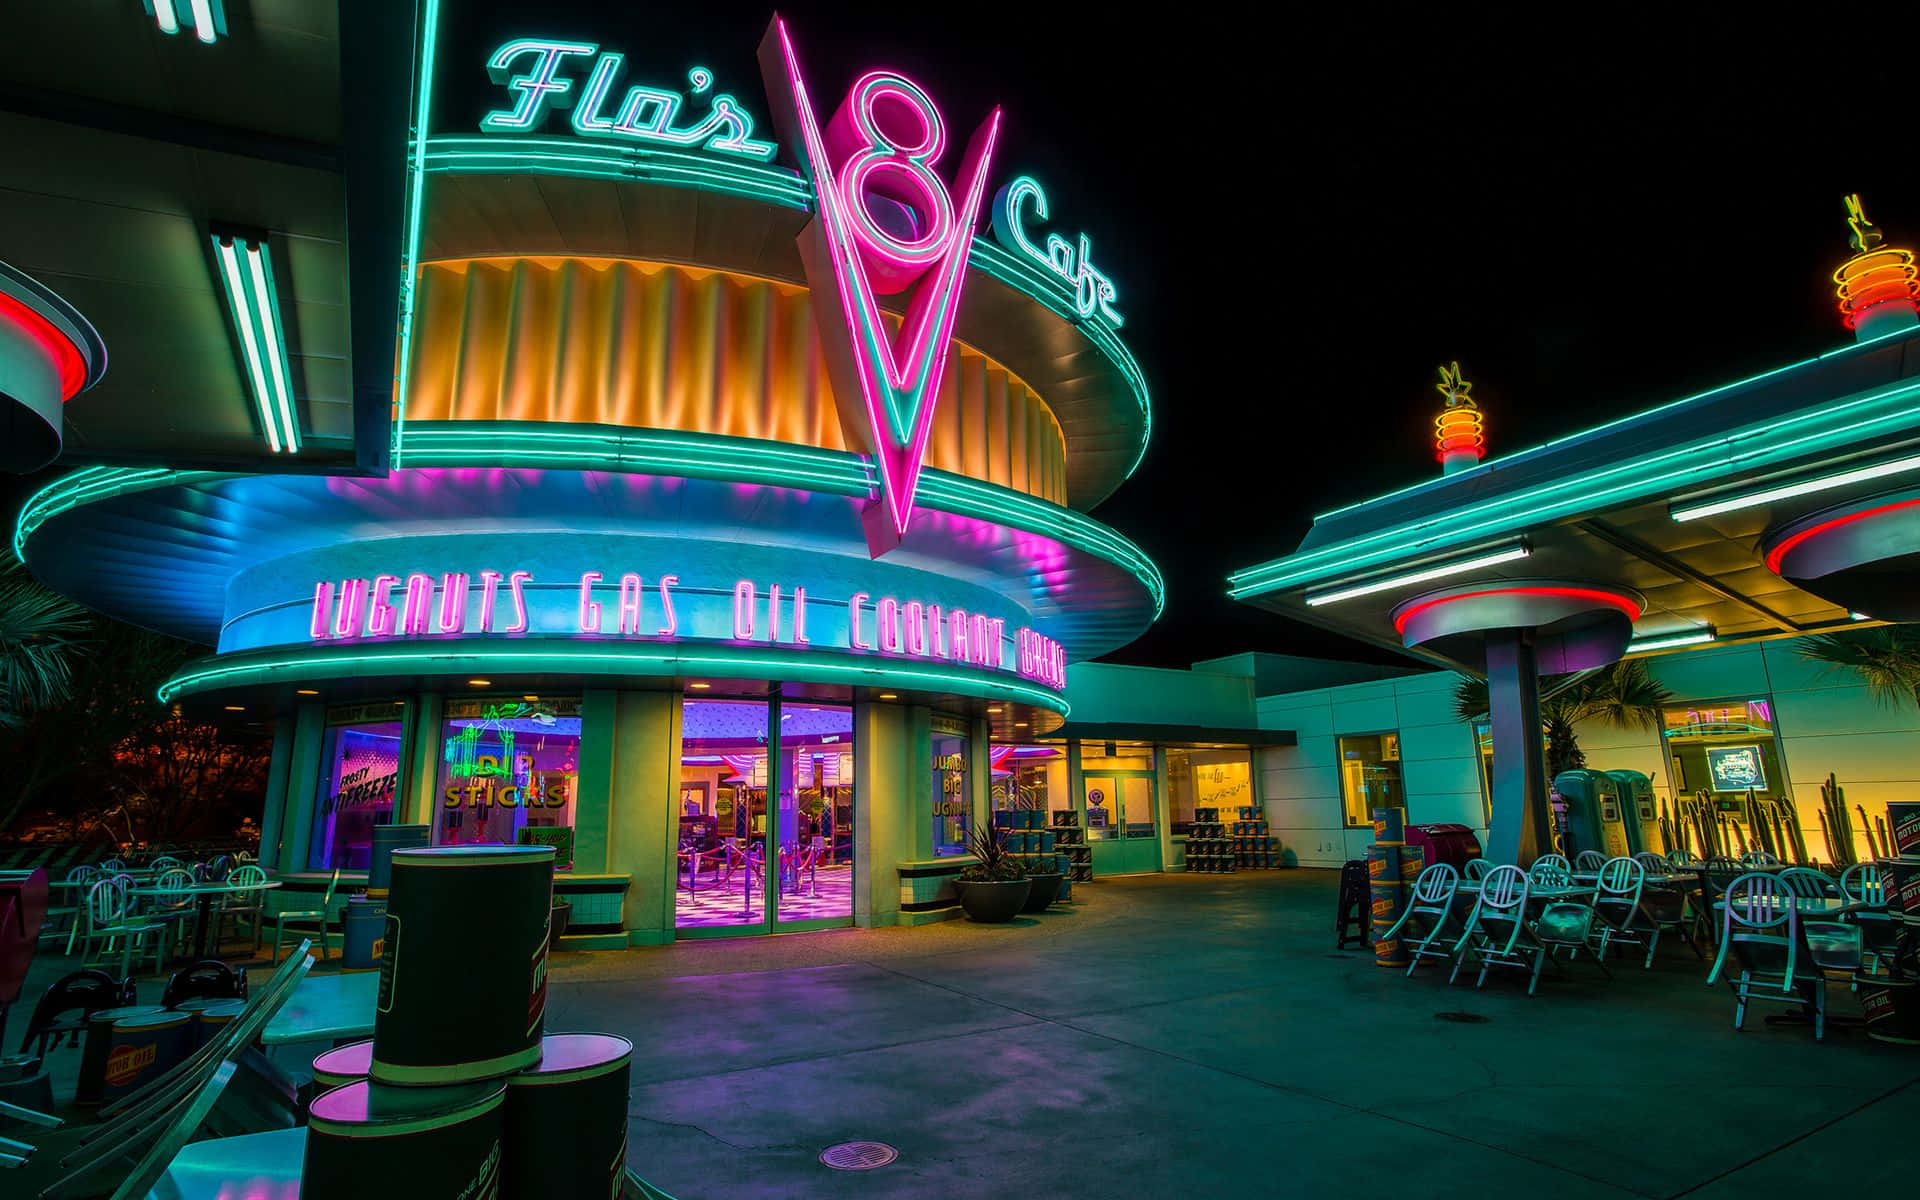 Flo's V8 Cafe Retro Diner Wallpaper